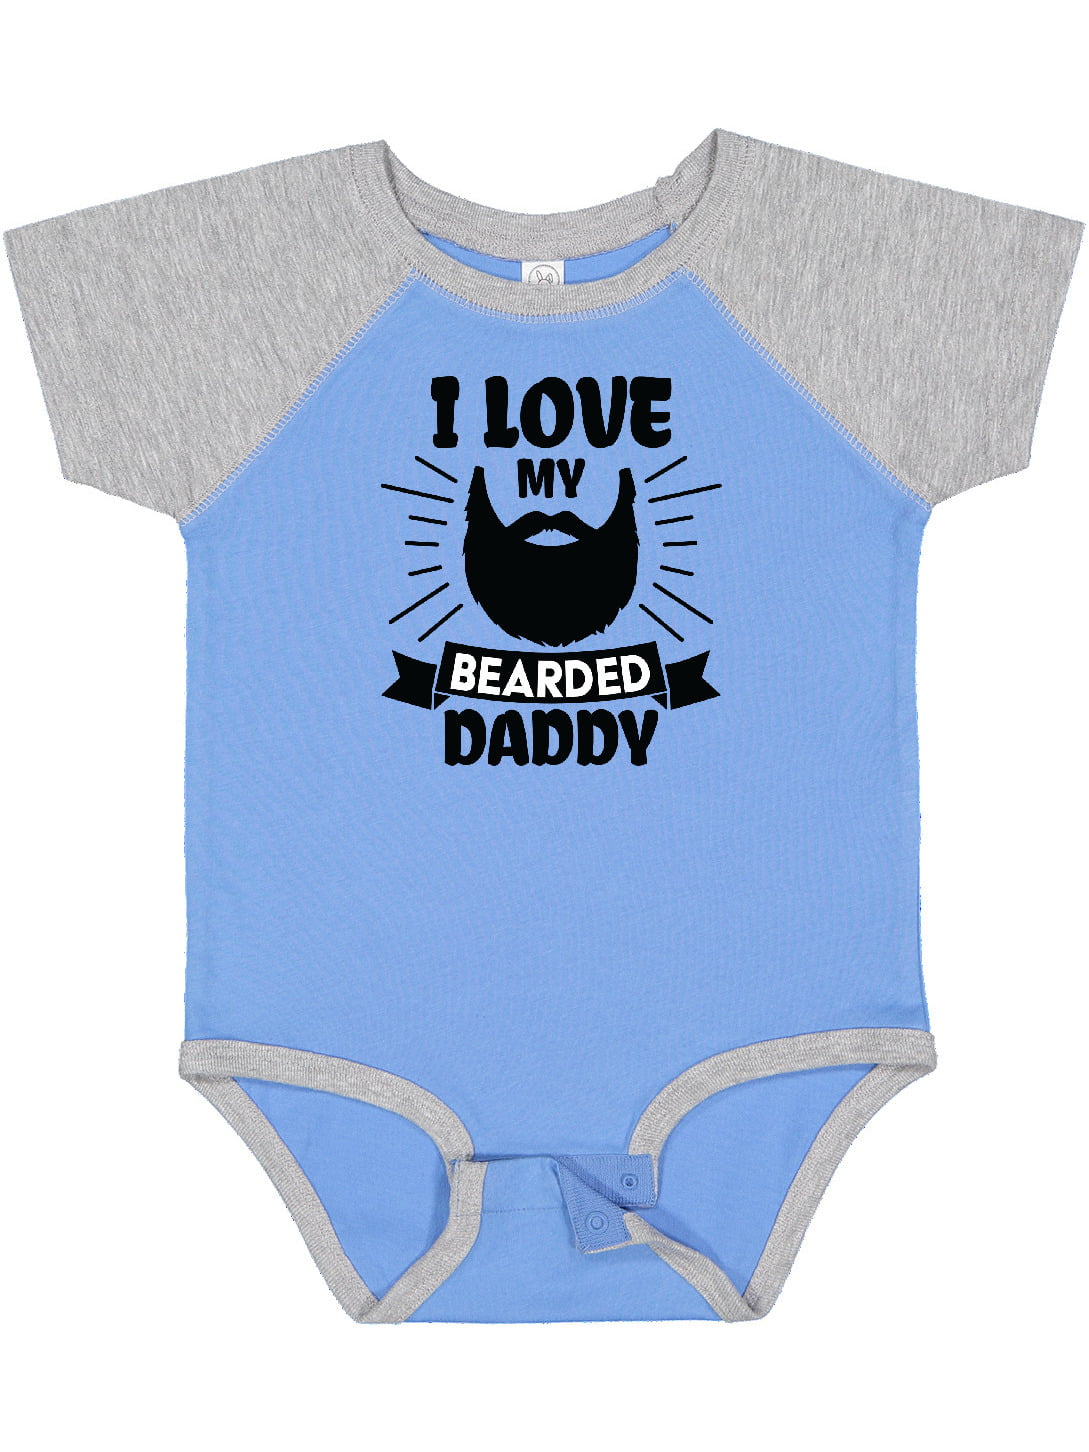 I Love My Bearded Daddy Baby Bodysuit Shirt for Newborn Baby Girls Boys